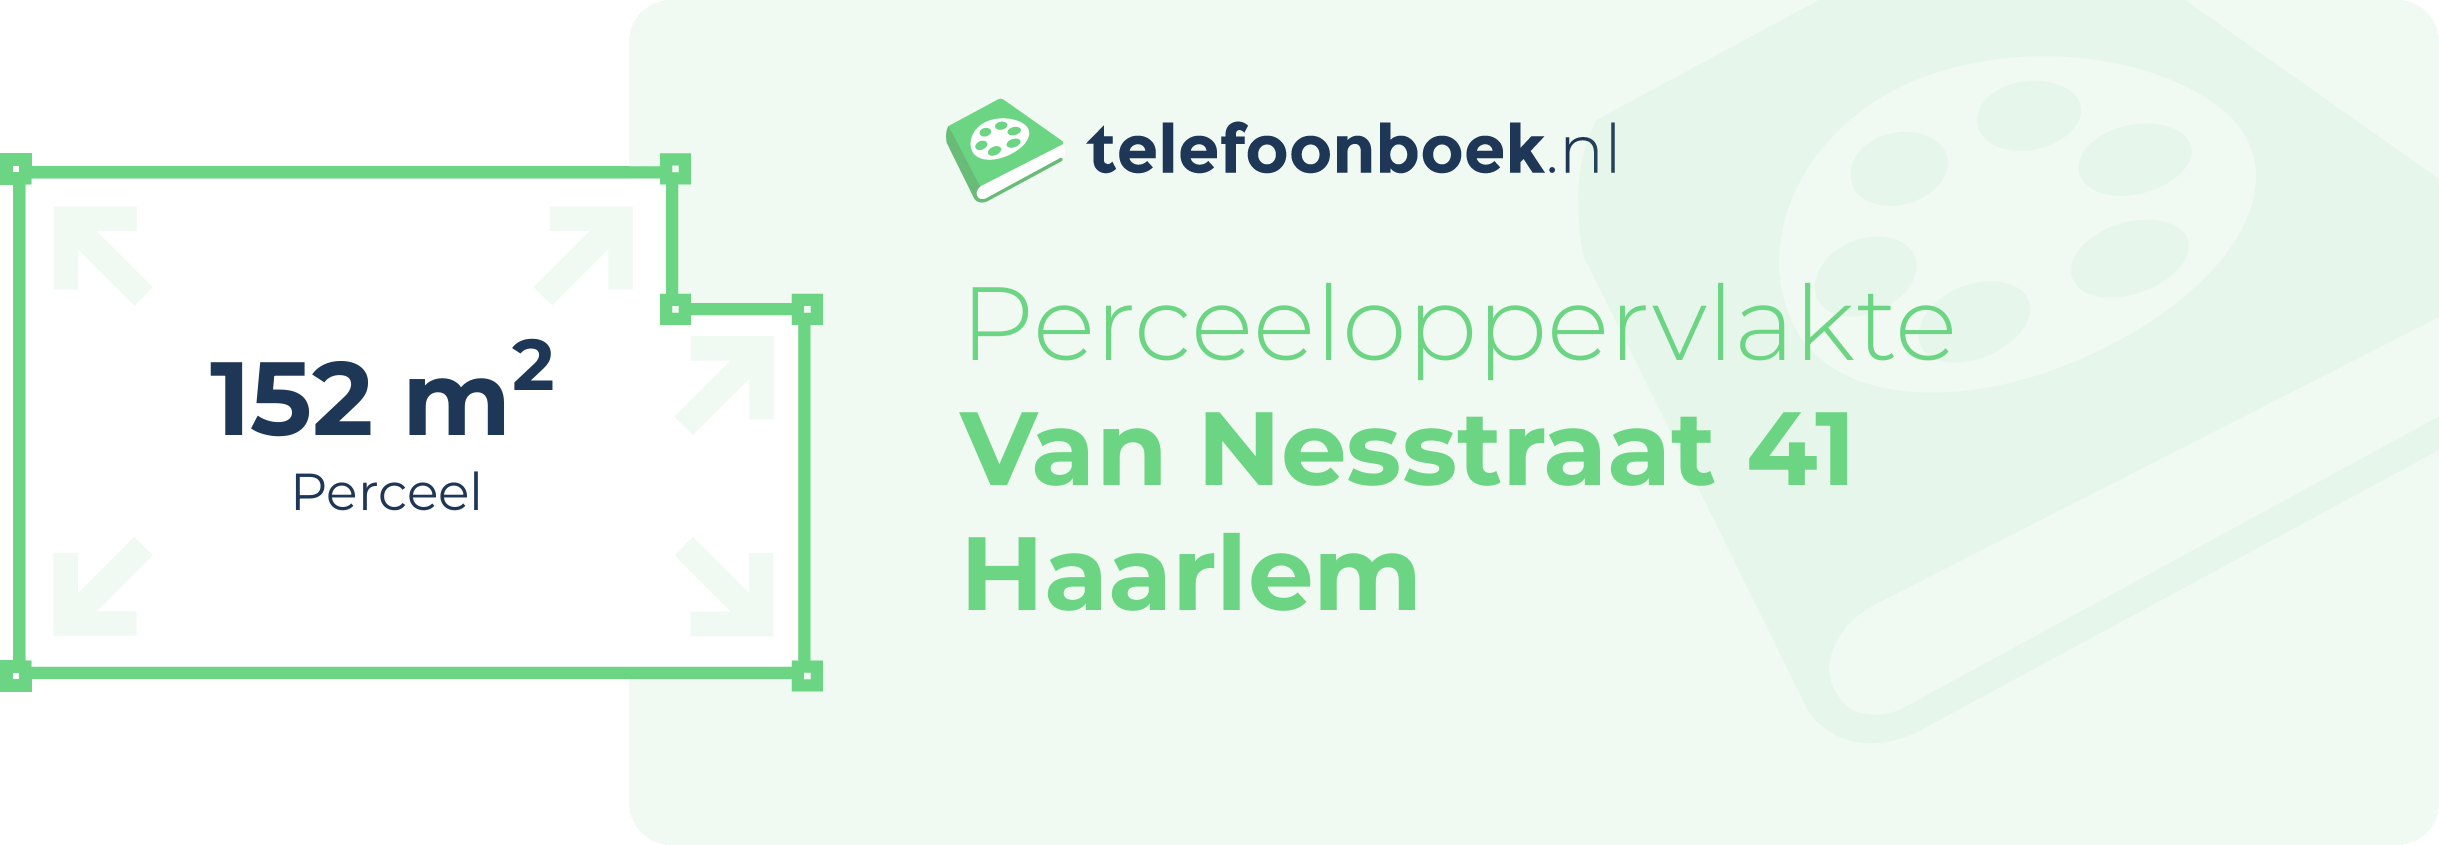 Perceeloppervlakte Van Nesstraat 41 Haarlem